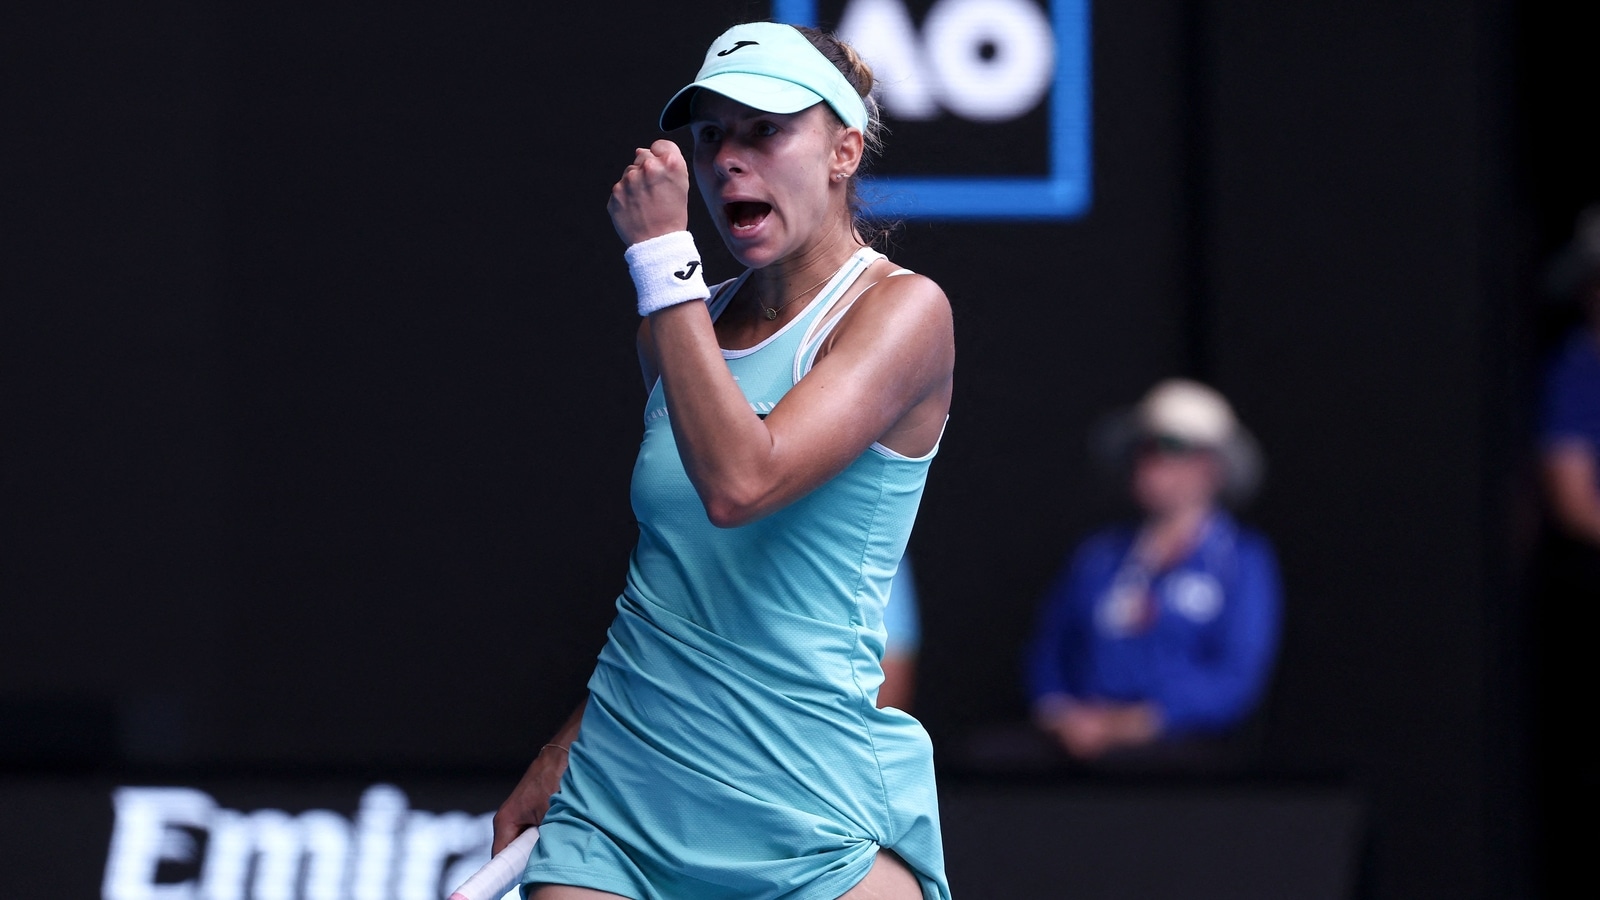 Australian Open Linette stuns Pliskova to reach first Grand Slam semi Tennis News